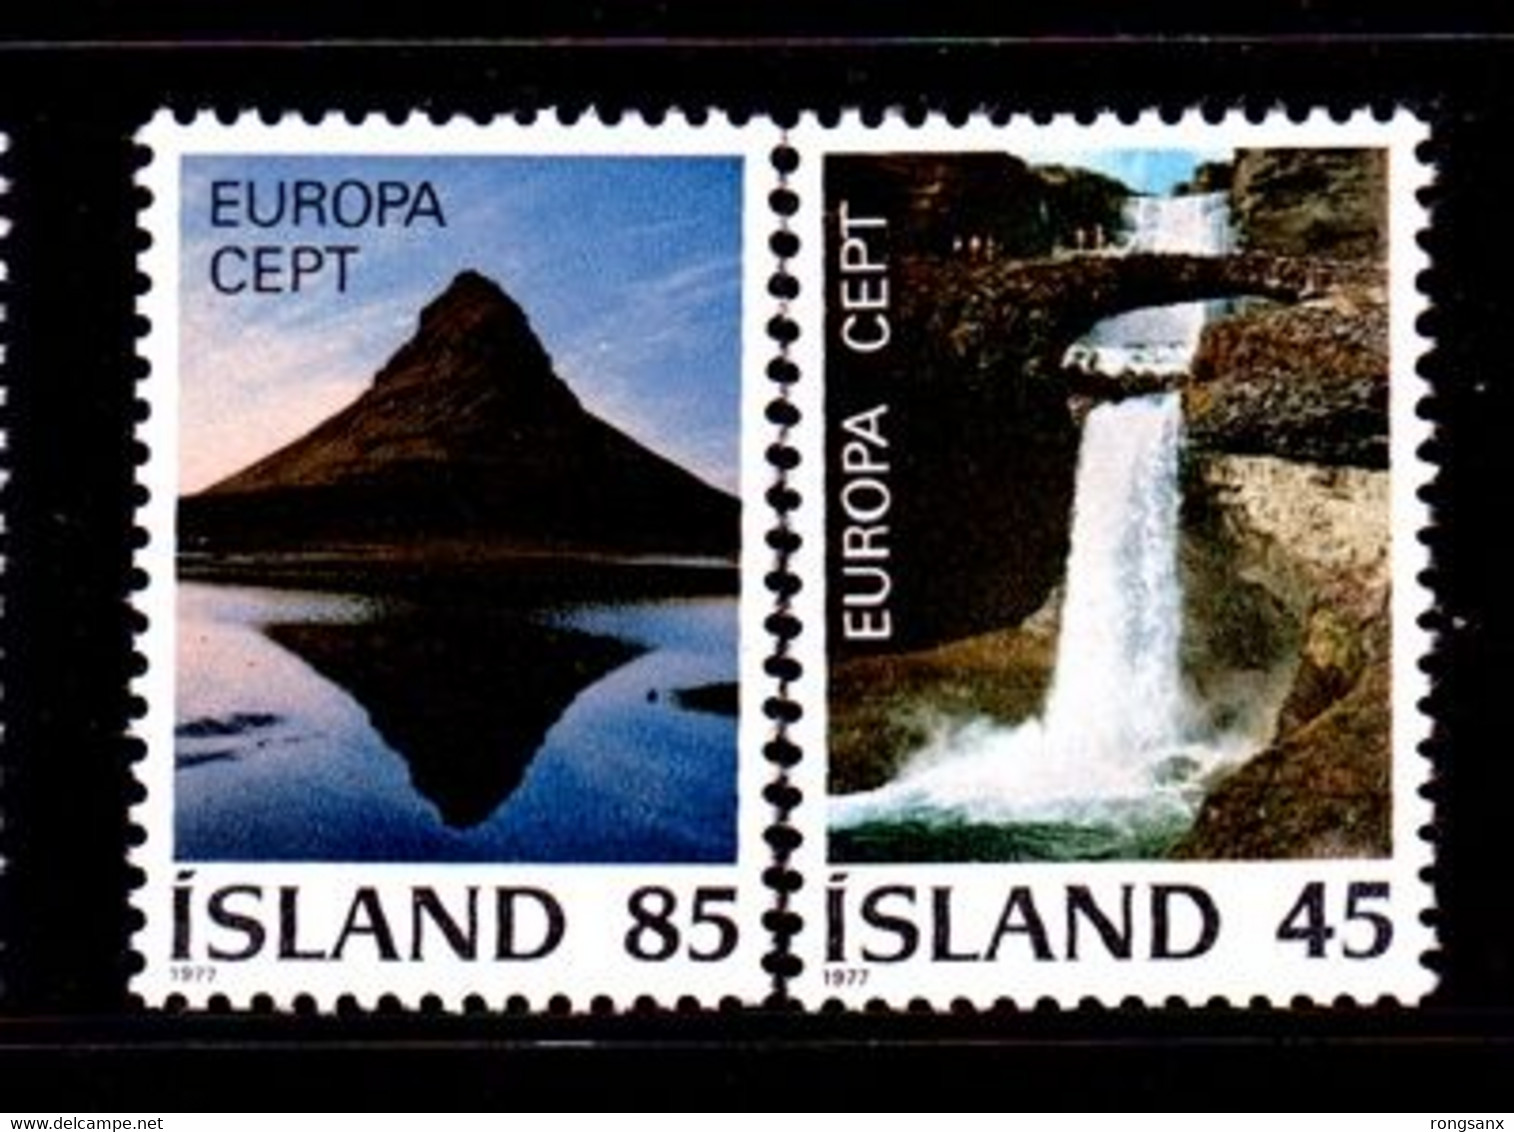 1977 ICELAND EUROPA WATERFALL ISLAND STAMP 2V - Nuevos